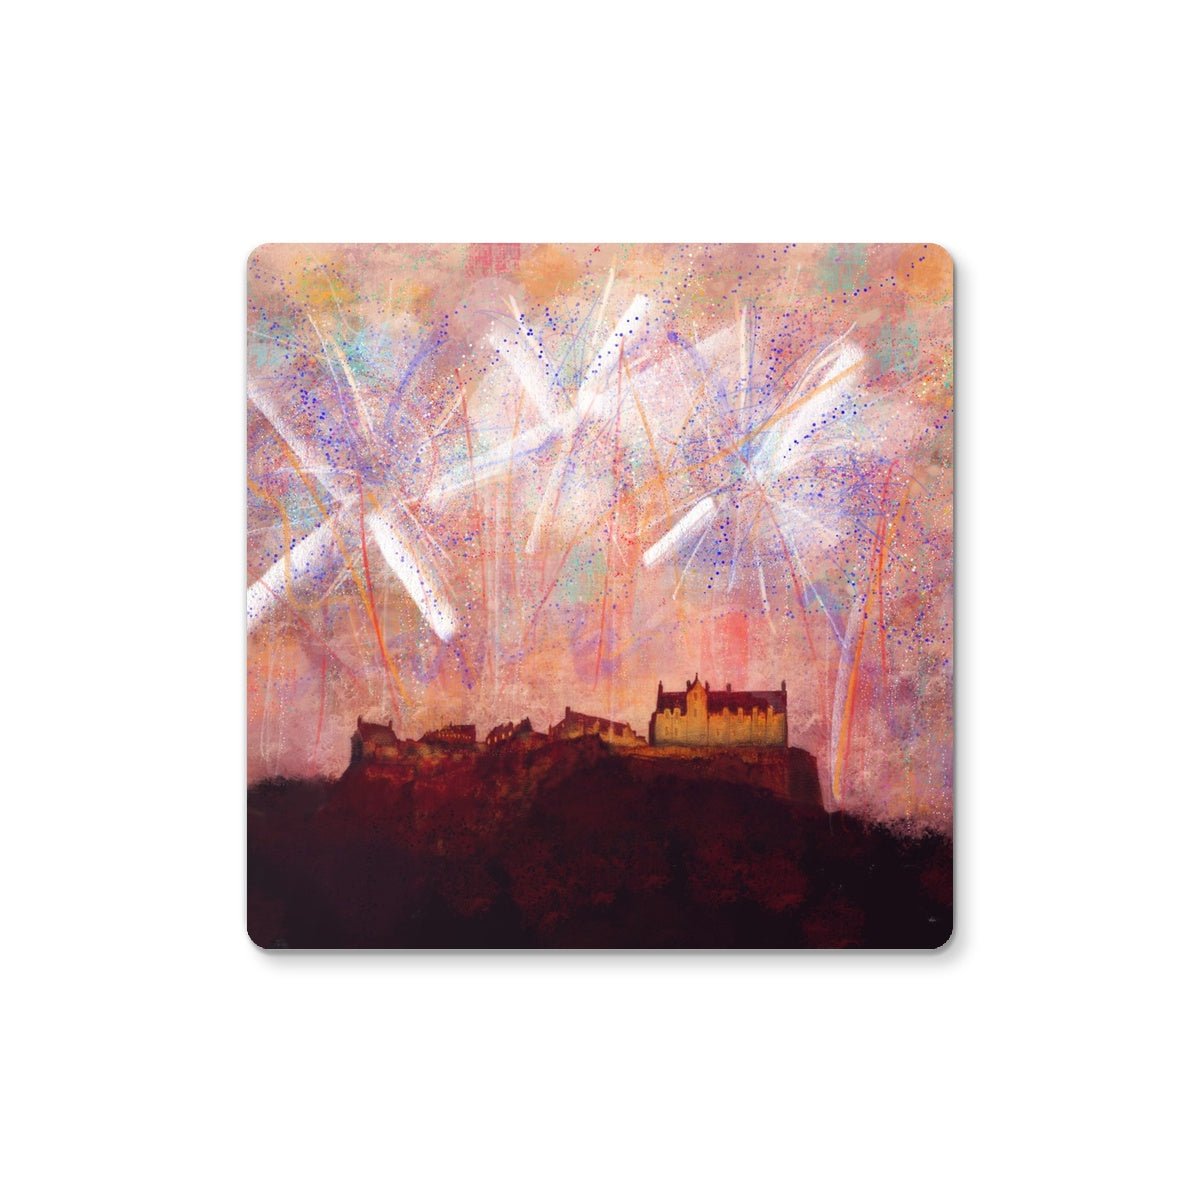 Edinburgh Castle Fireworks Art Gifts Coaster-Coasters-Edinburgh & Glasgow Art Gallery-Single Coaster-Paintings, Prints, Homeware, Art Gifts From Scotland By Scottish Artist Kevin Hunter